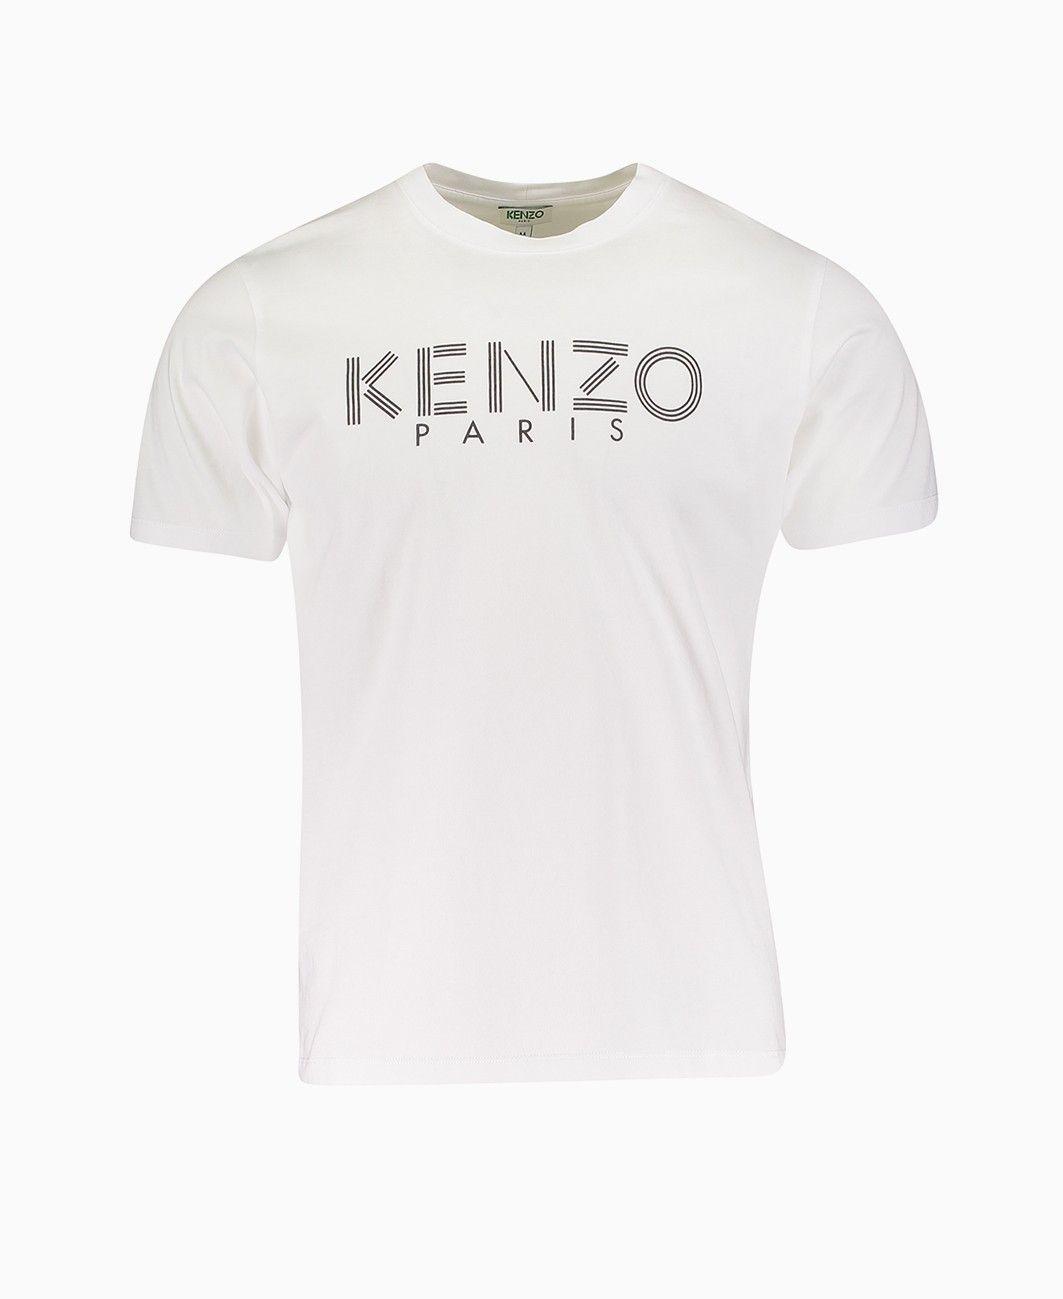 Kenzo Paris Logo - Kenzo Logo Print T Shirt